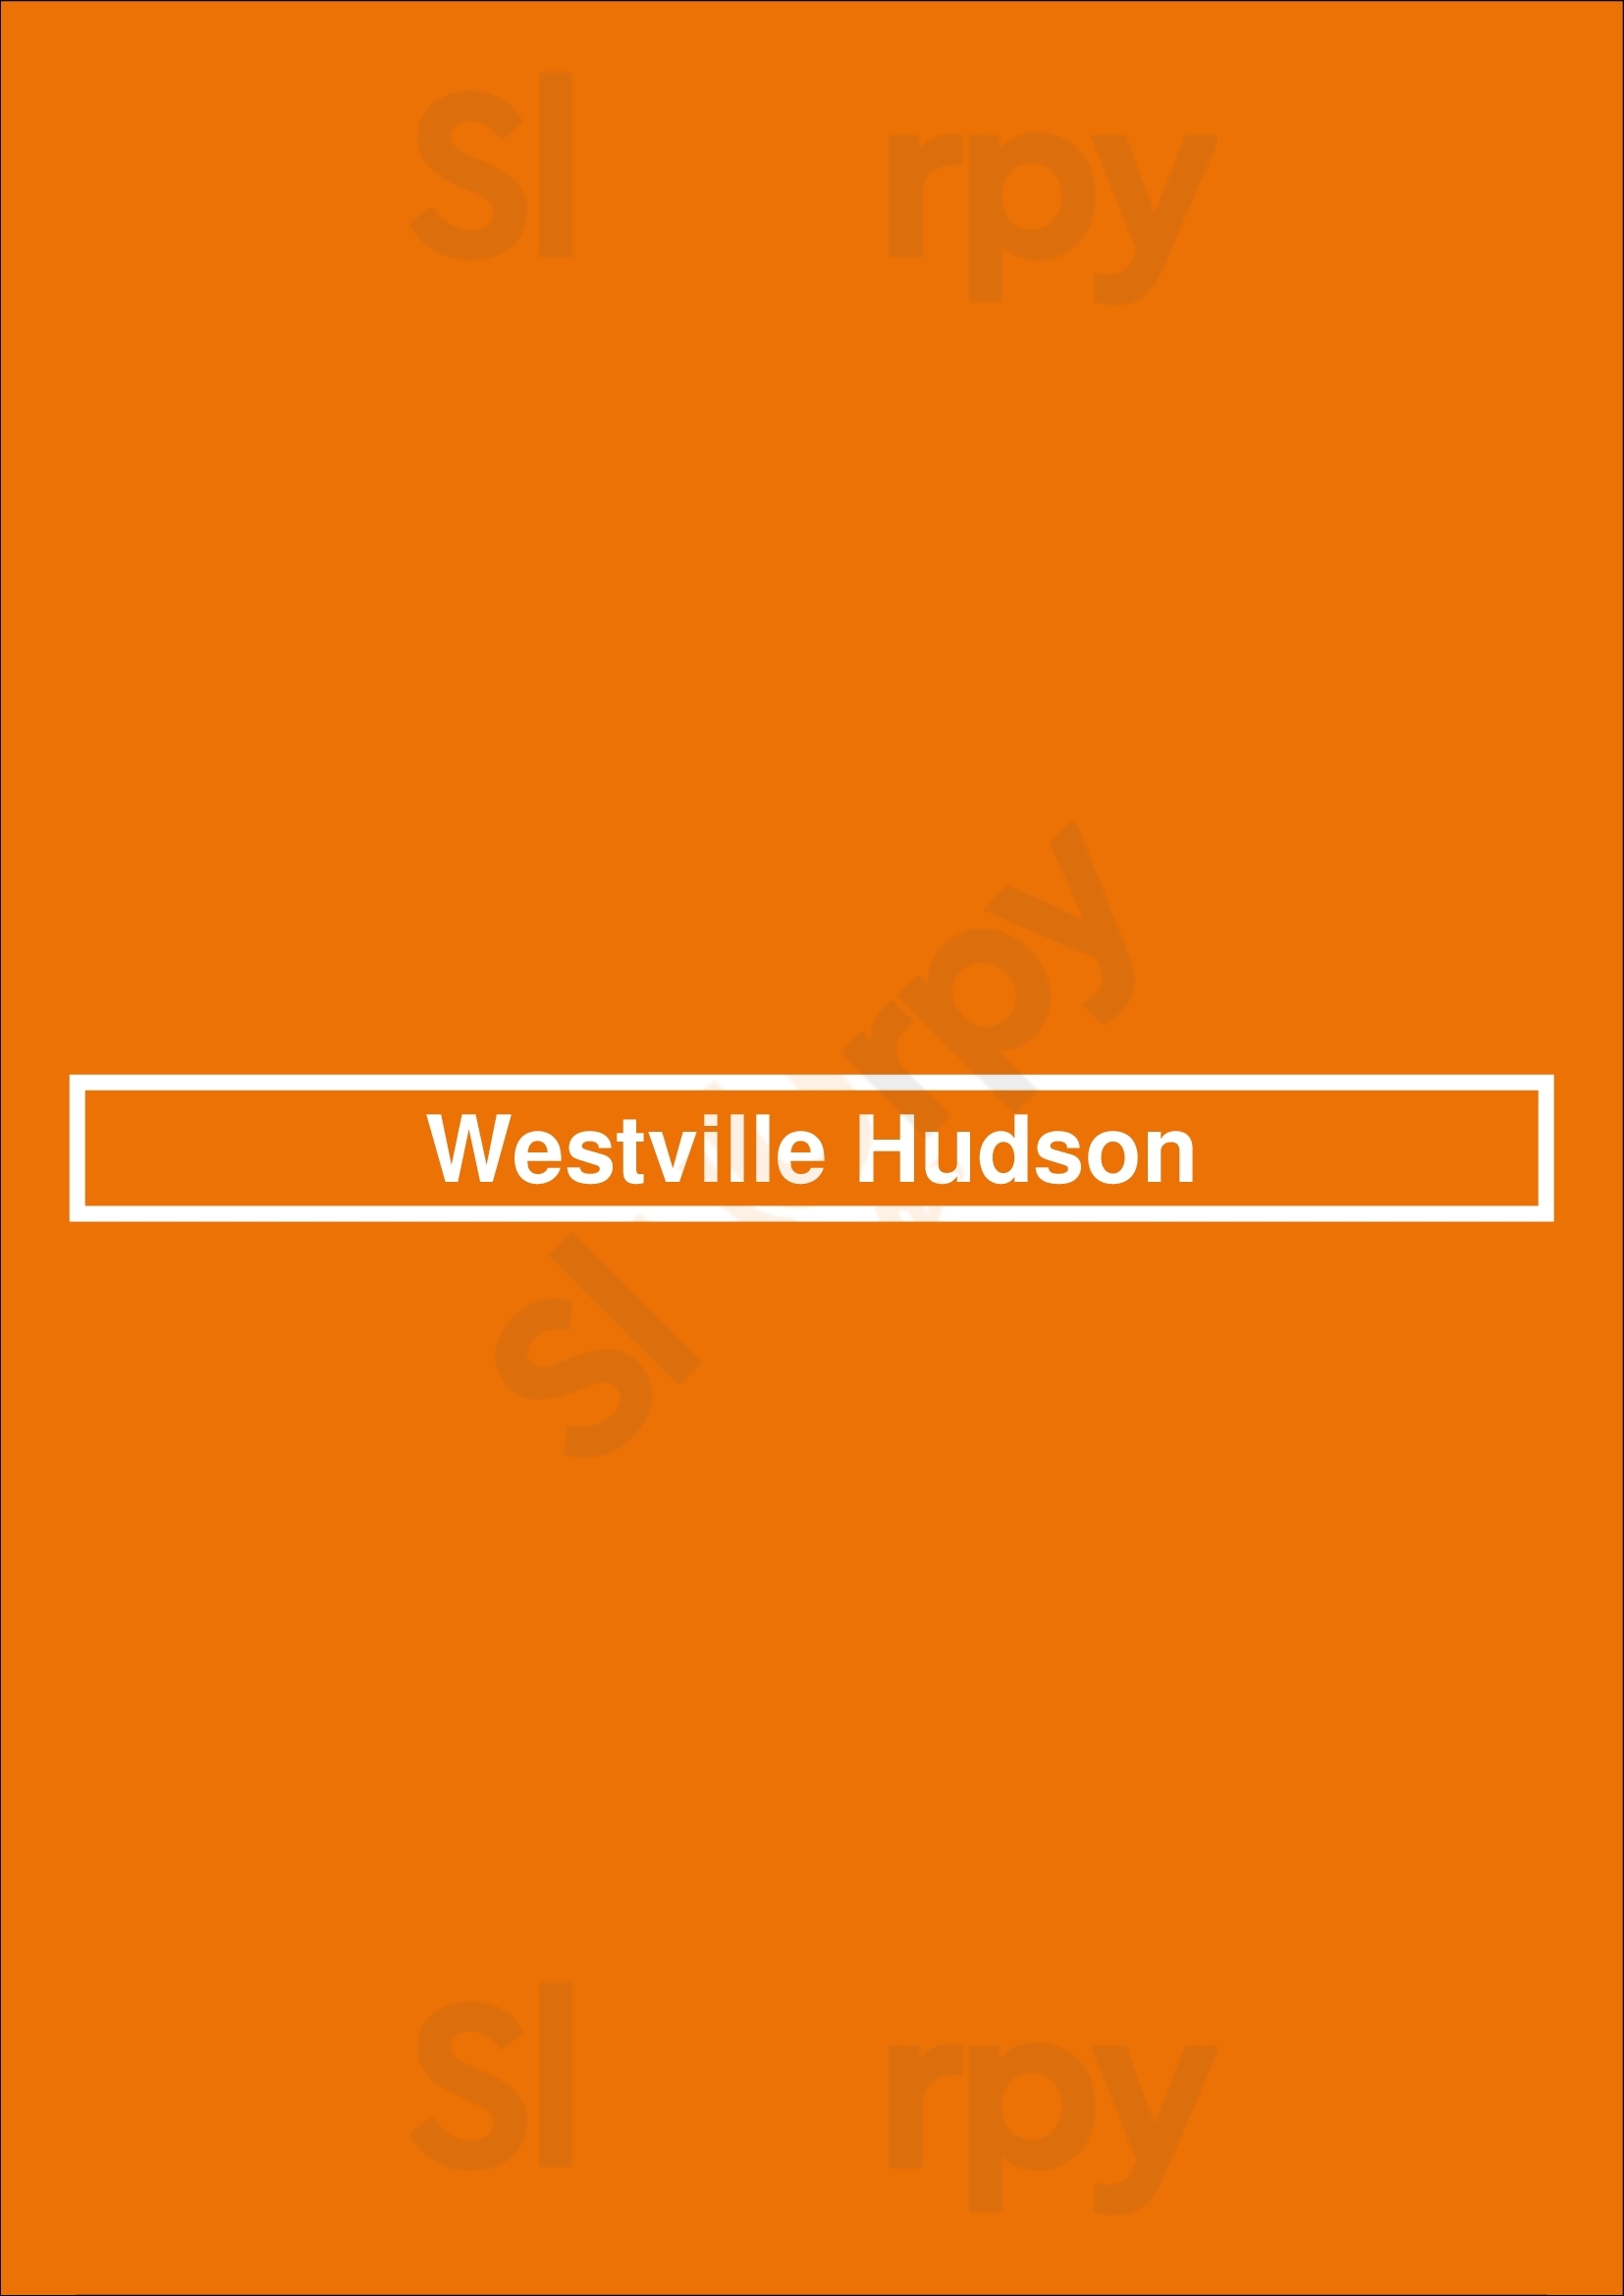 Westville Hudson New York City Menu - 1